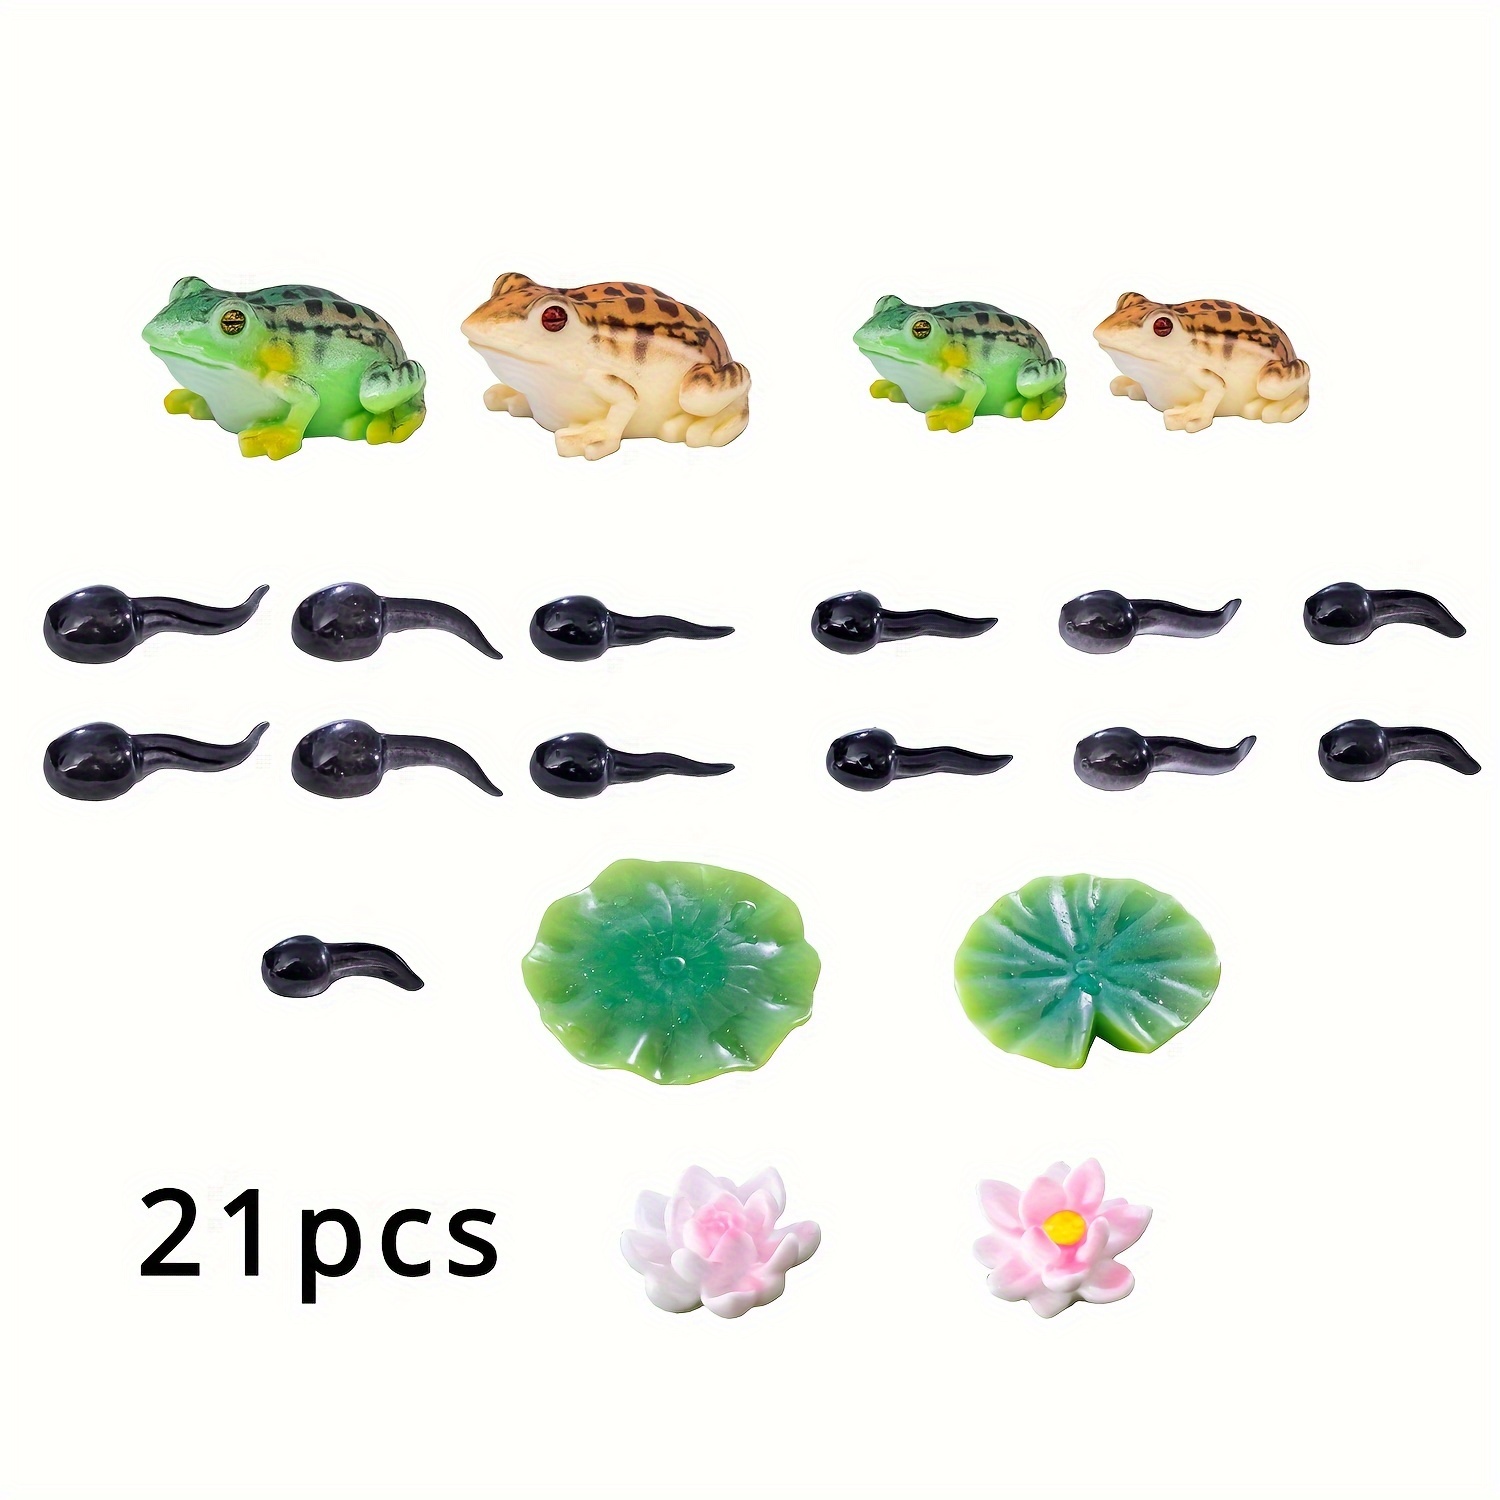 21pcs Assorted Color Fish Tank Miniature Mini Resin Frog Tadpole Animals  Mini Figurines For Diy Fish Tank Accessories Aquarium Micro Landscape, Shop The Latest Trends